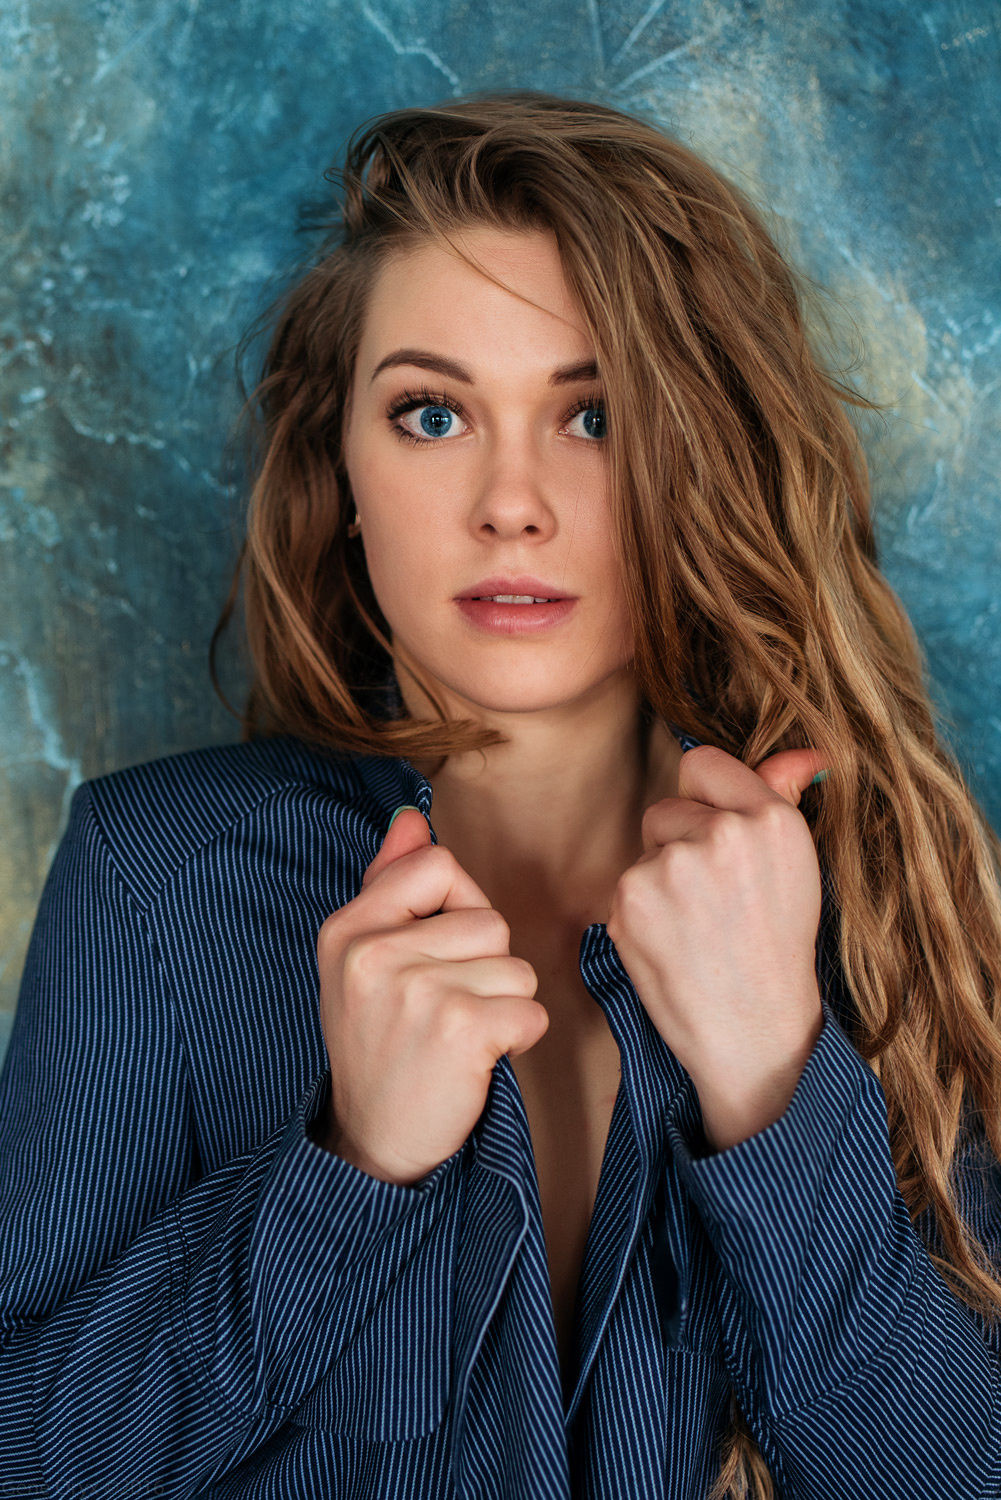 Konstantin Kryukovskiy Women Brunette Long Hair Wavy Hair Blue Eyes Shirt Stripes Portrait Wall Blue 1001x1500